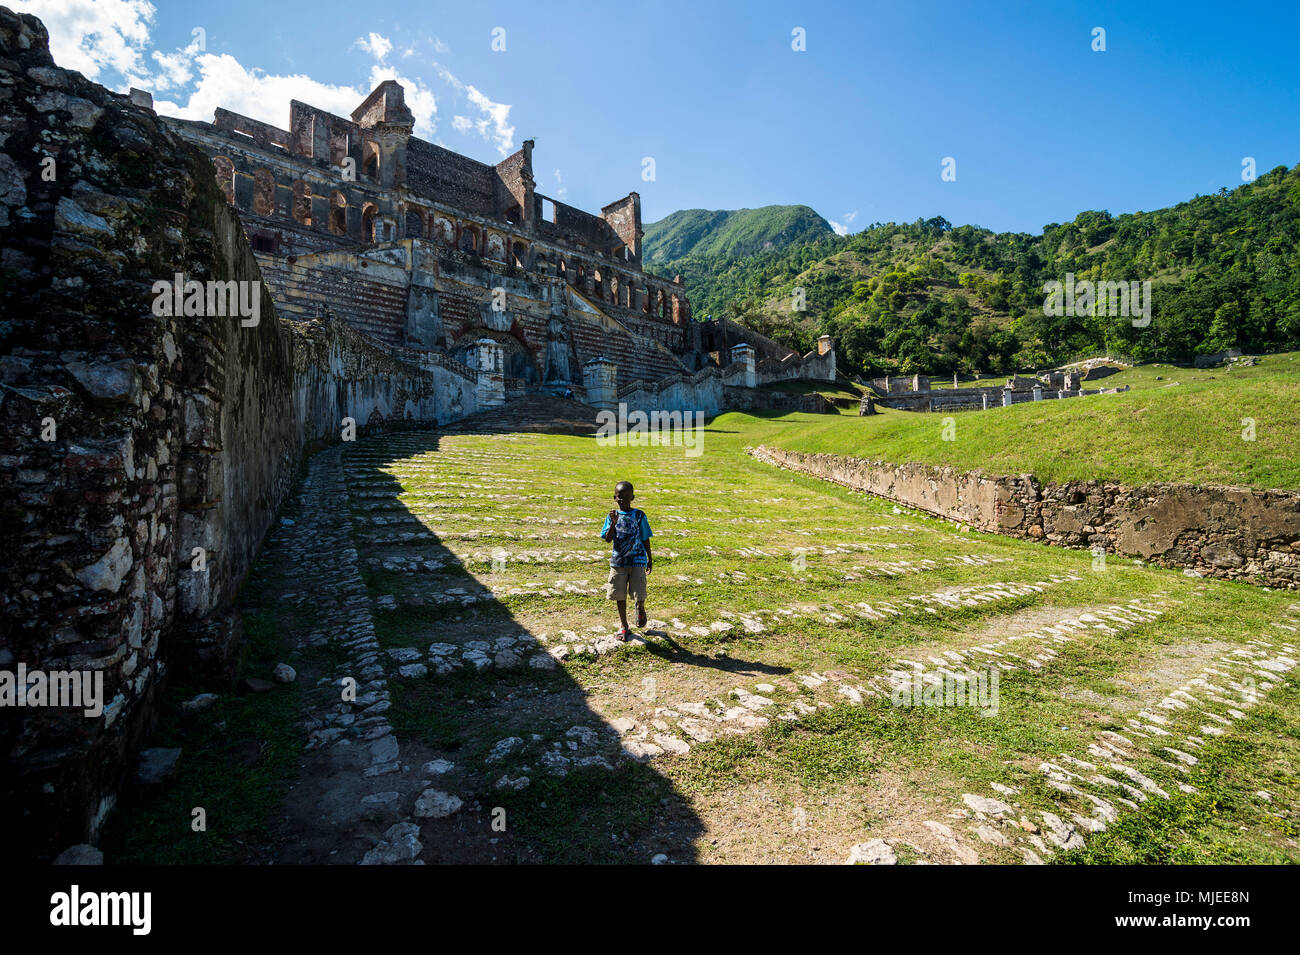 Unesco world heritage Palace Sans Souci, Haiti, Caribbean Stock Photo